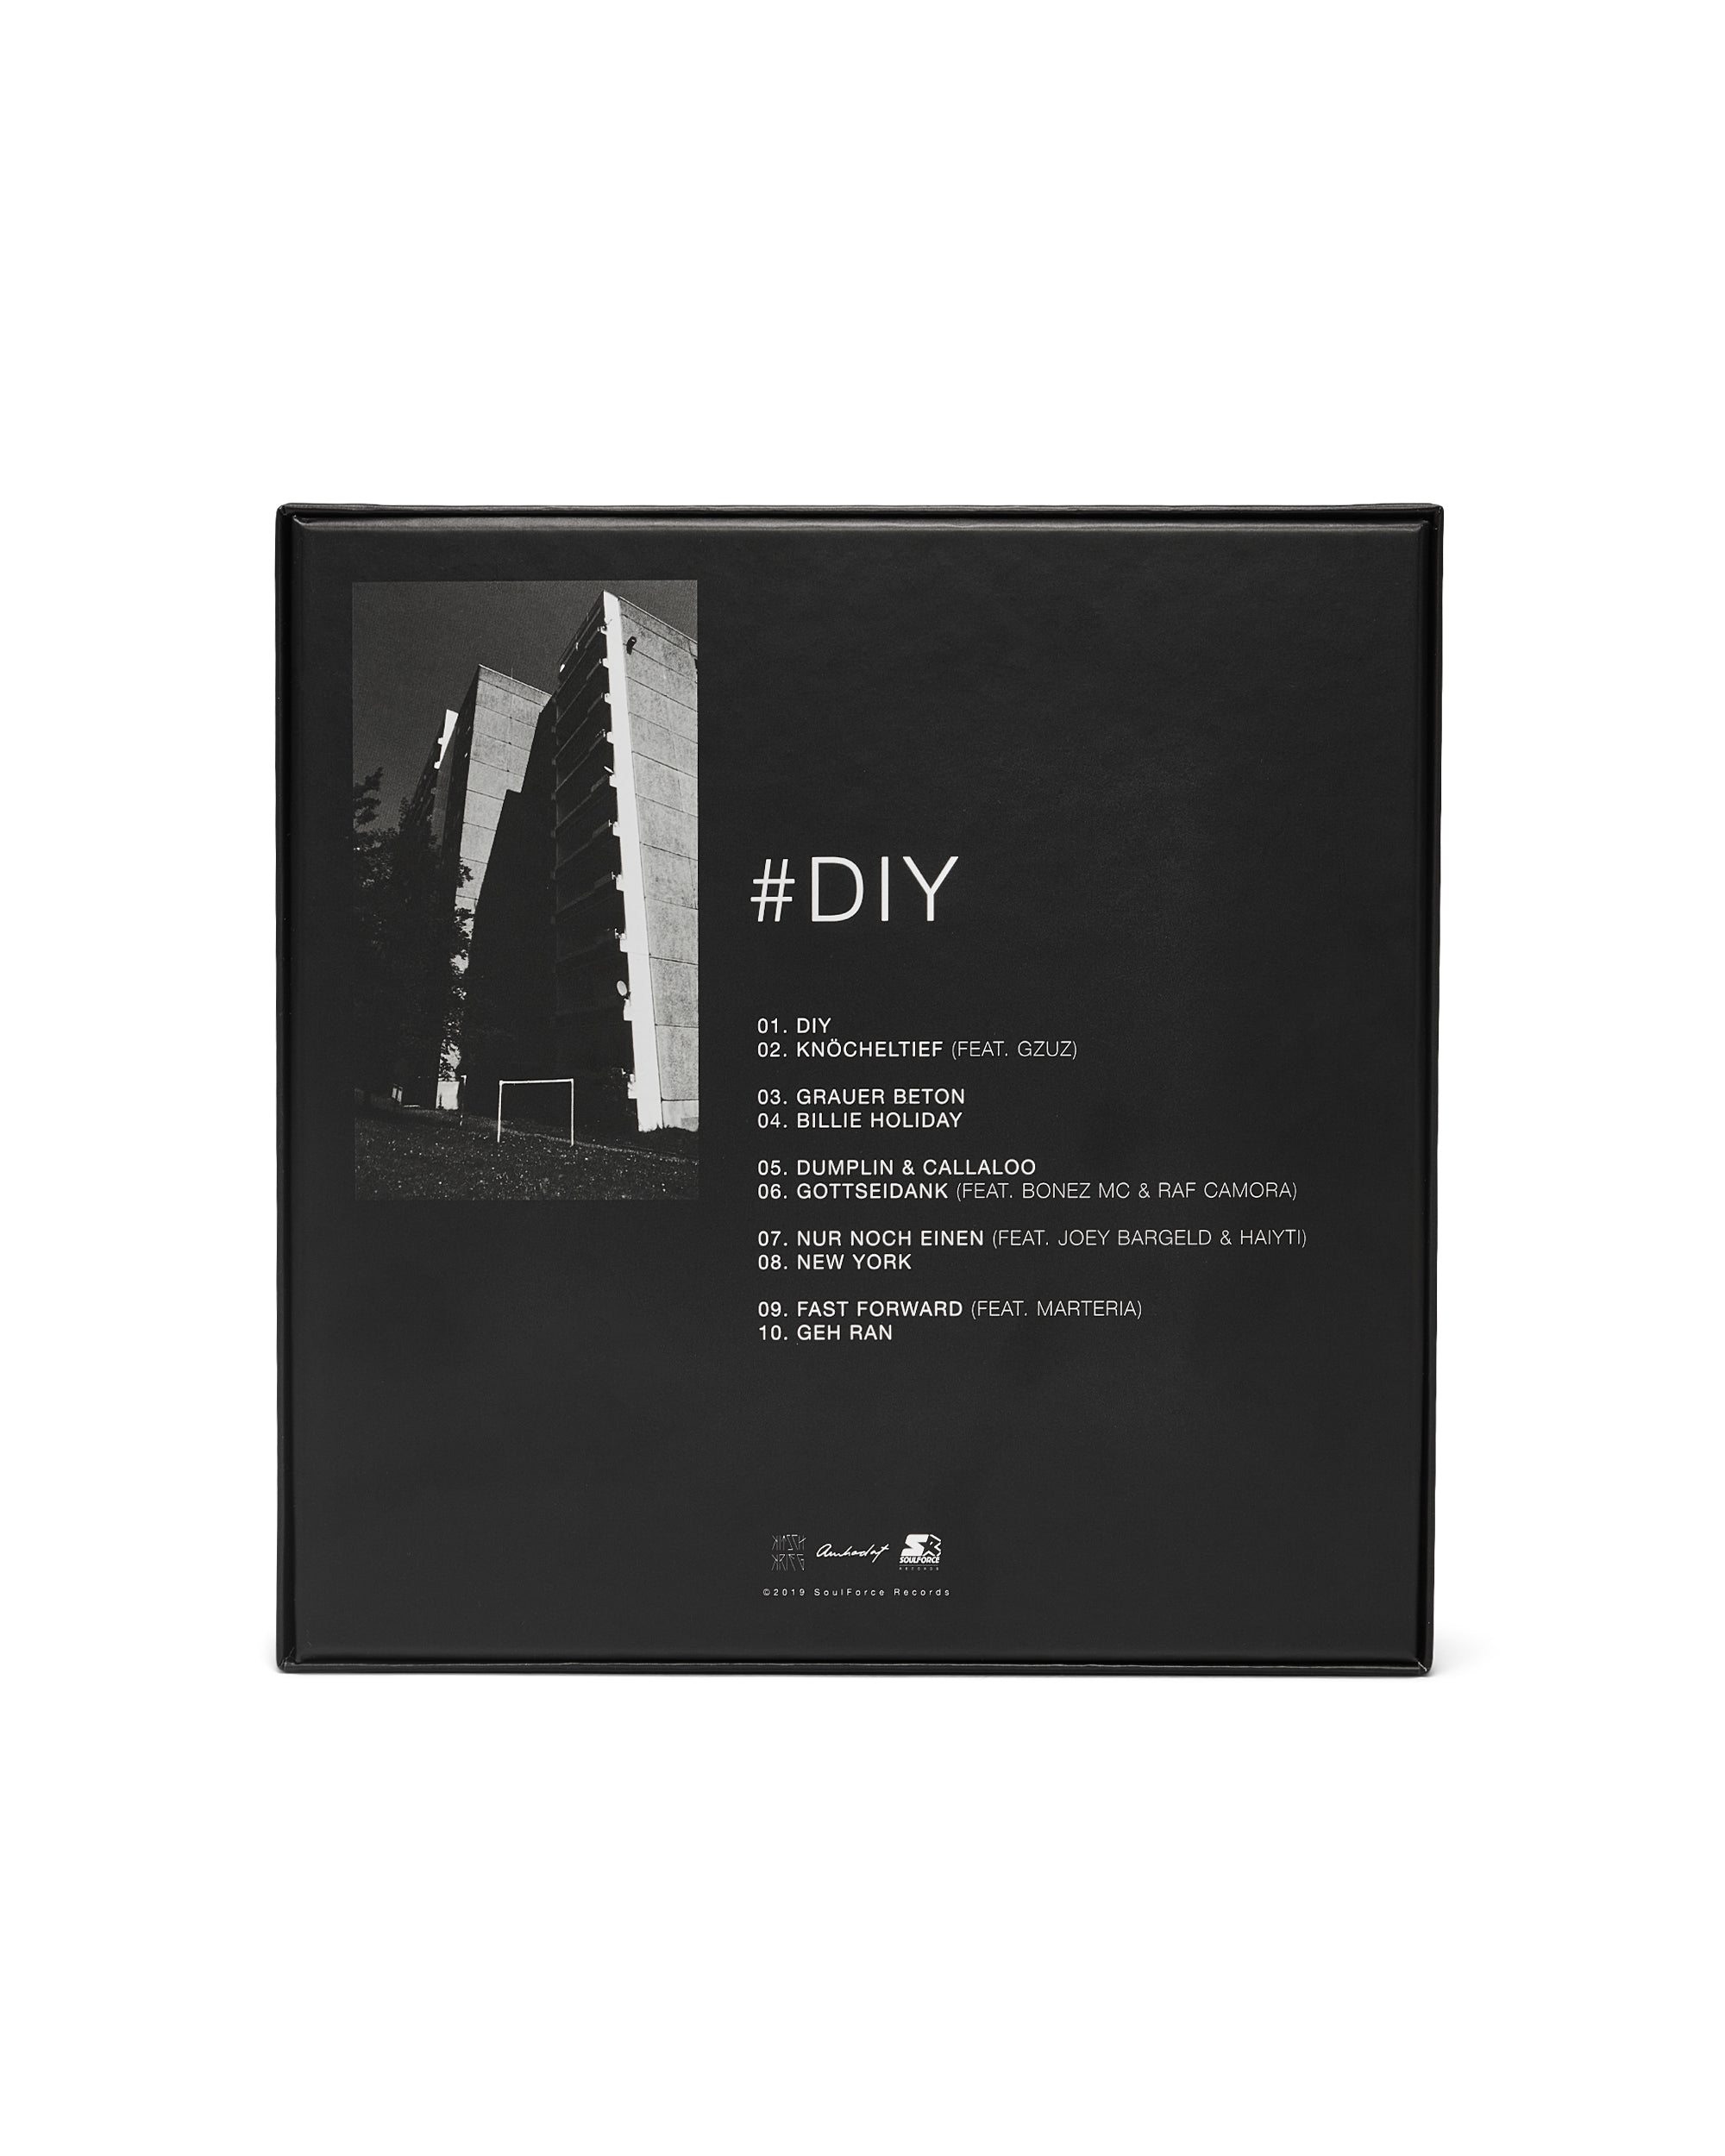 TRETTMANN – "#DIY" (ALBUM) 7″ BOX